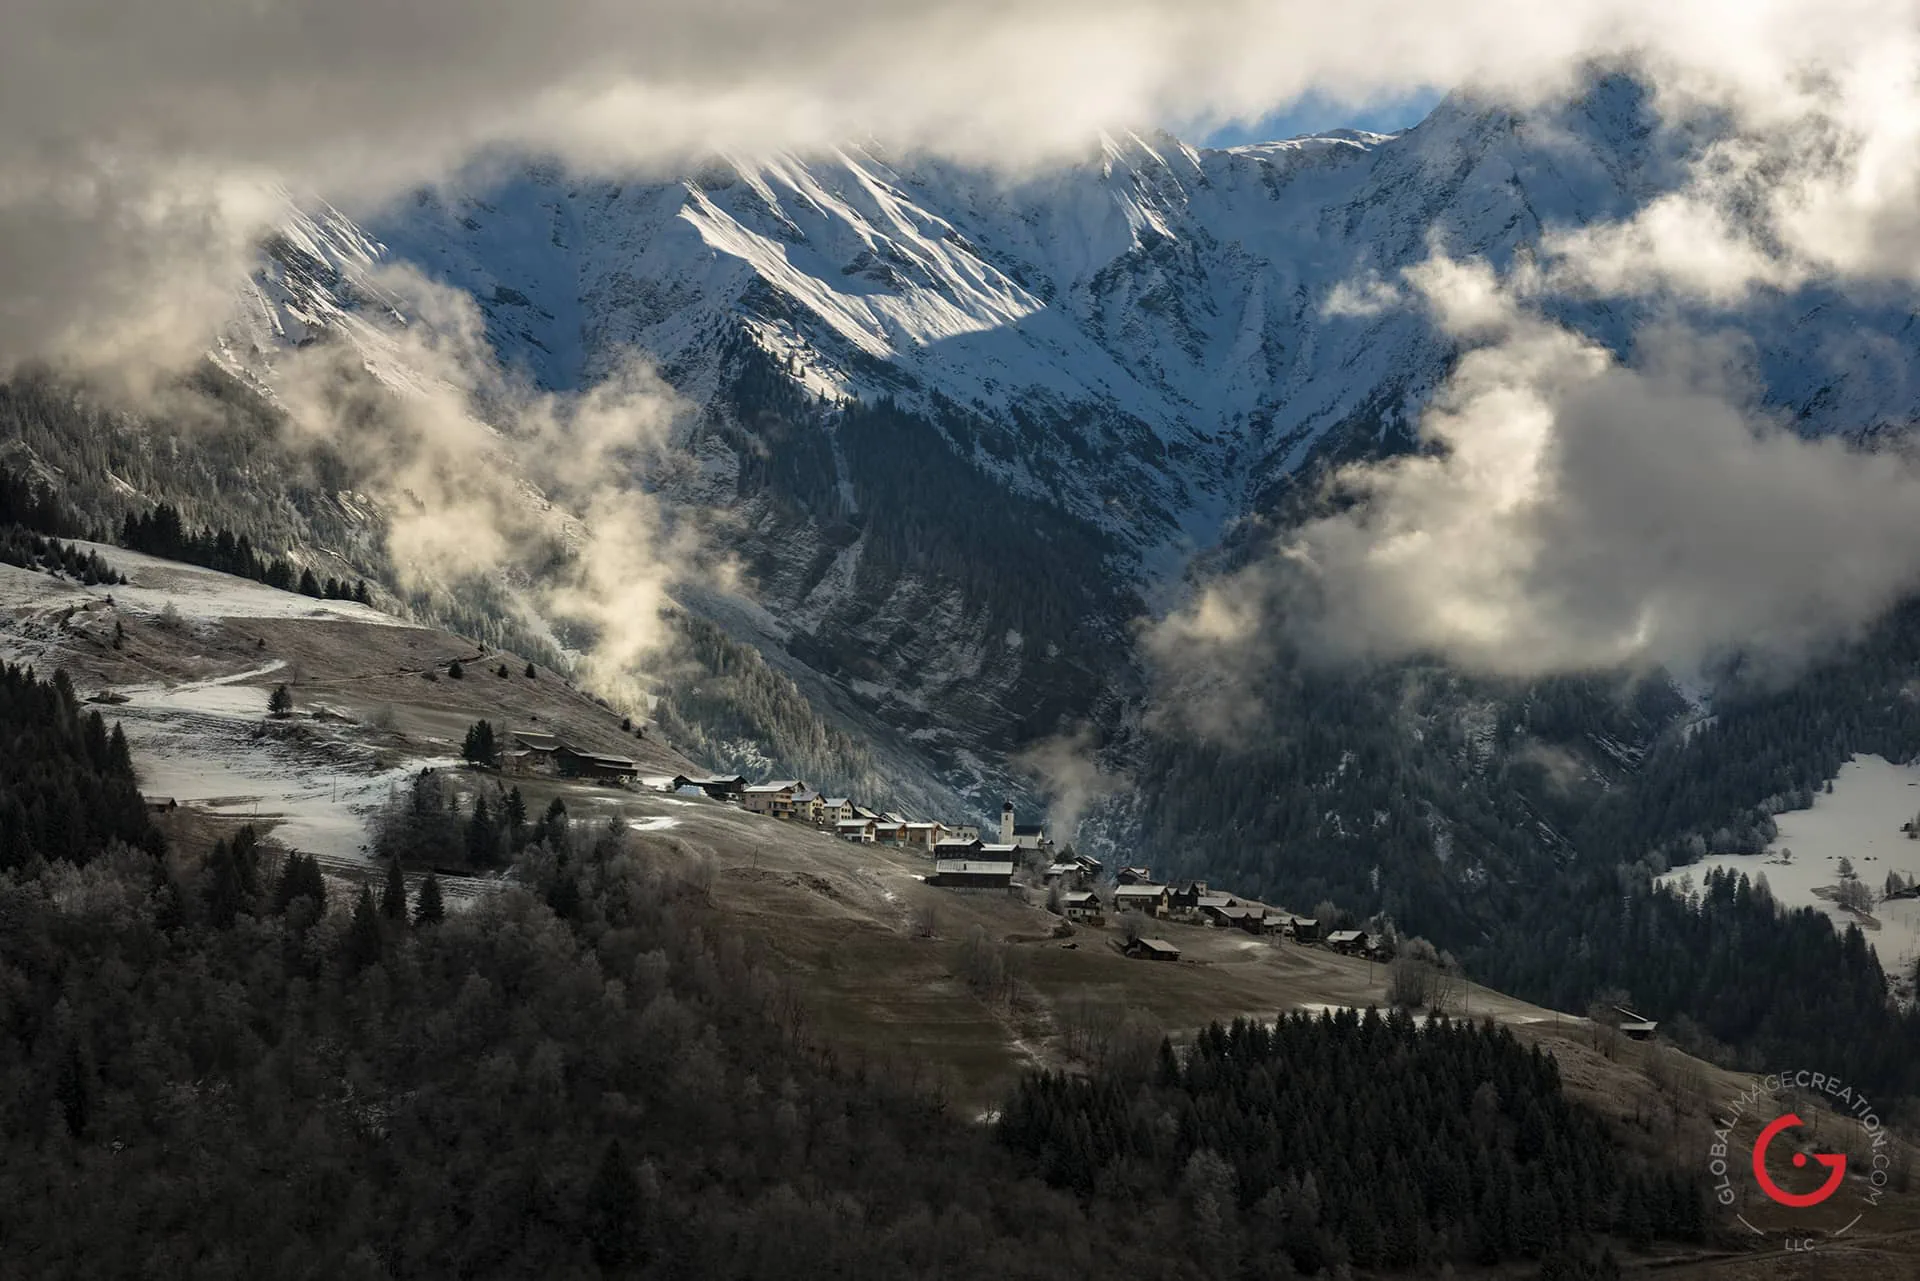 Swiss Alps Winter Village - Travel Photographer